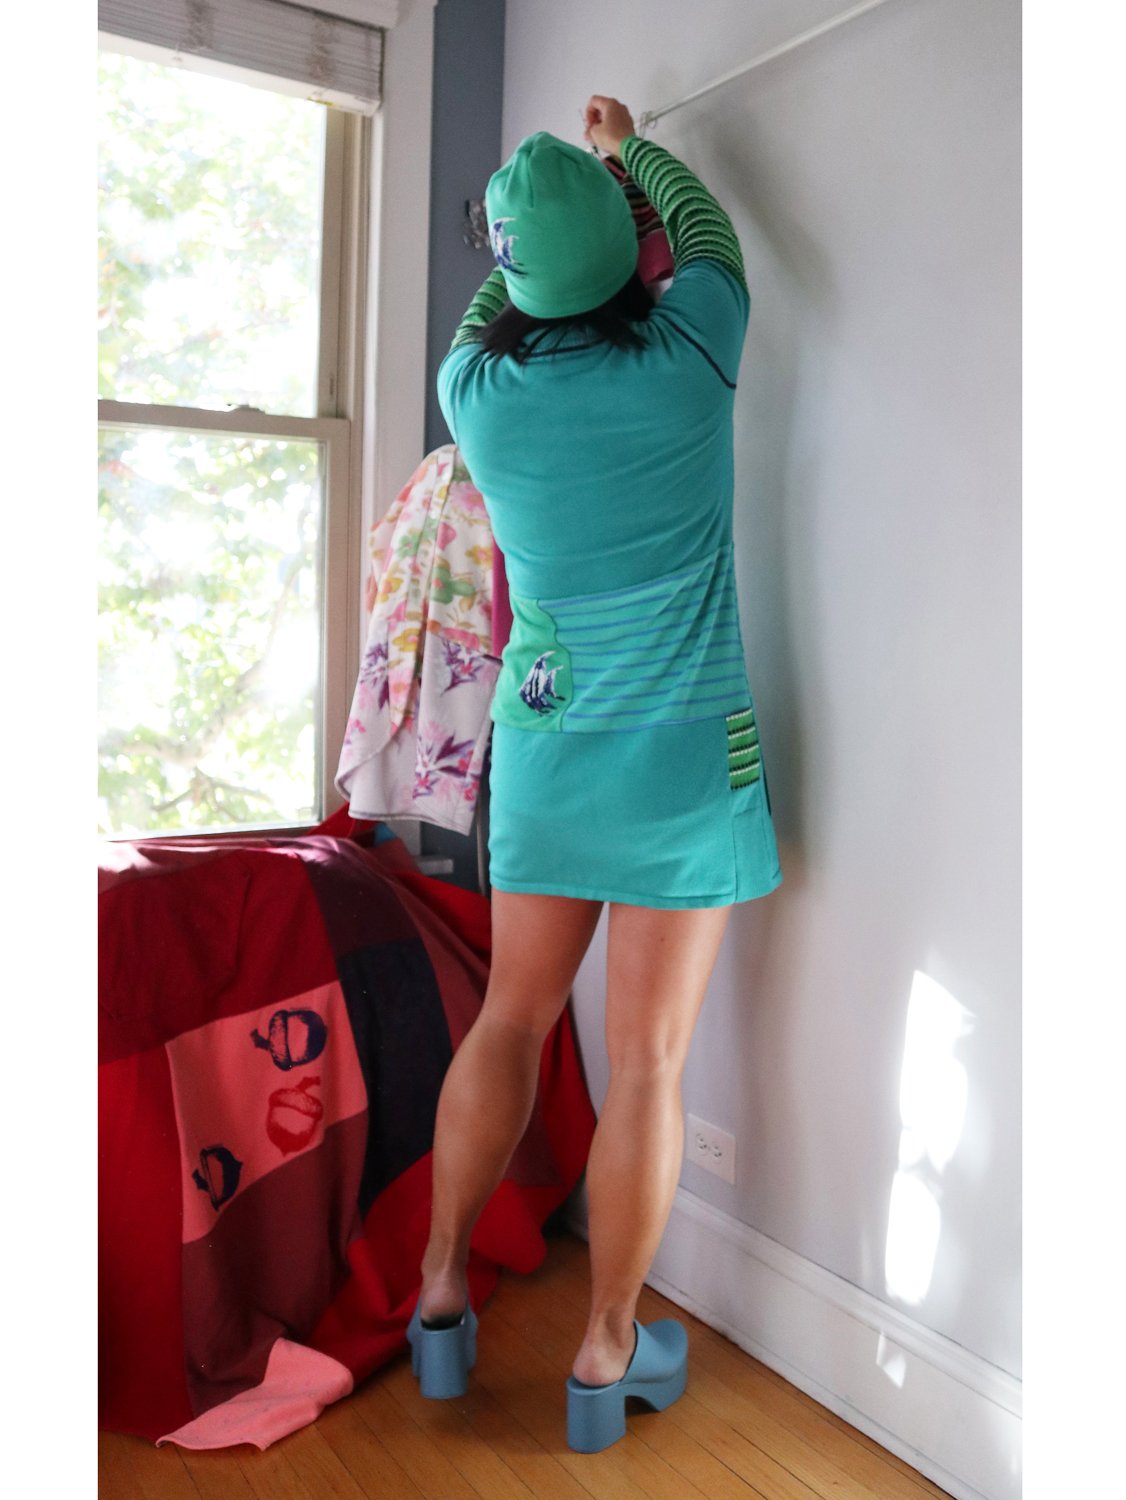 back 41st birthday fish green aqua zip up dress beanie.jpg